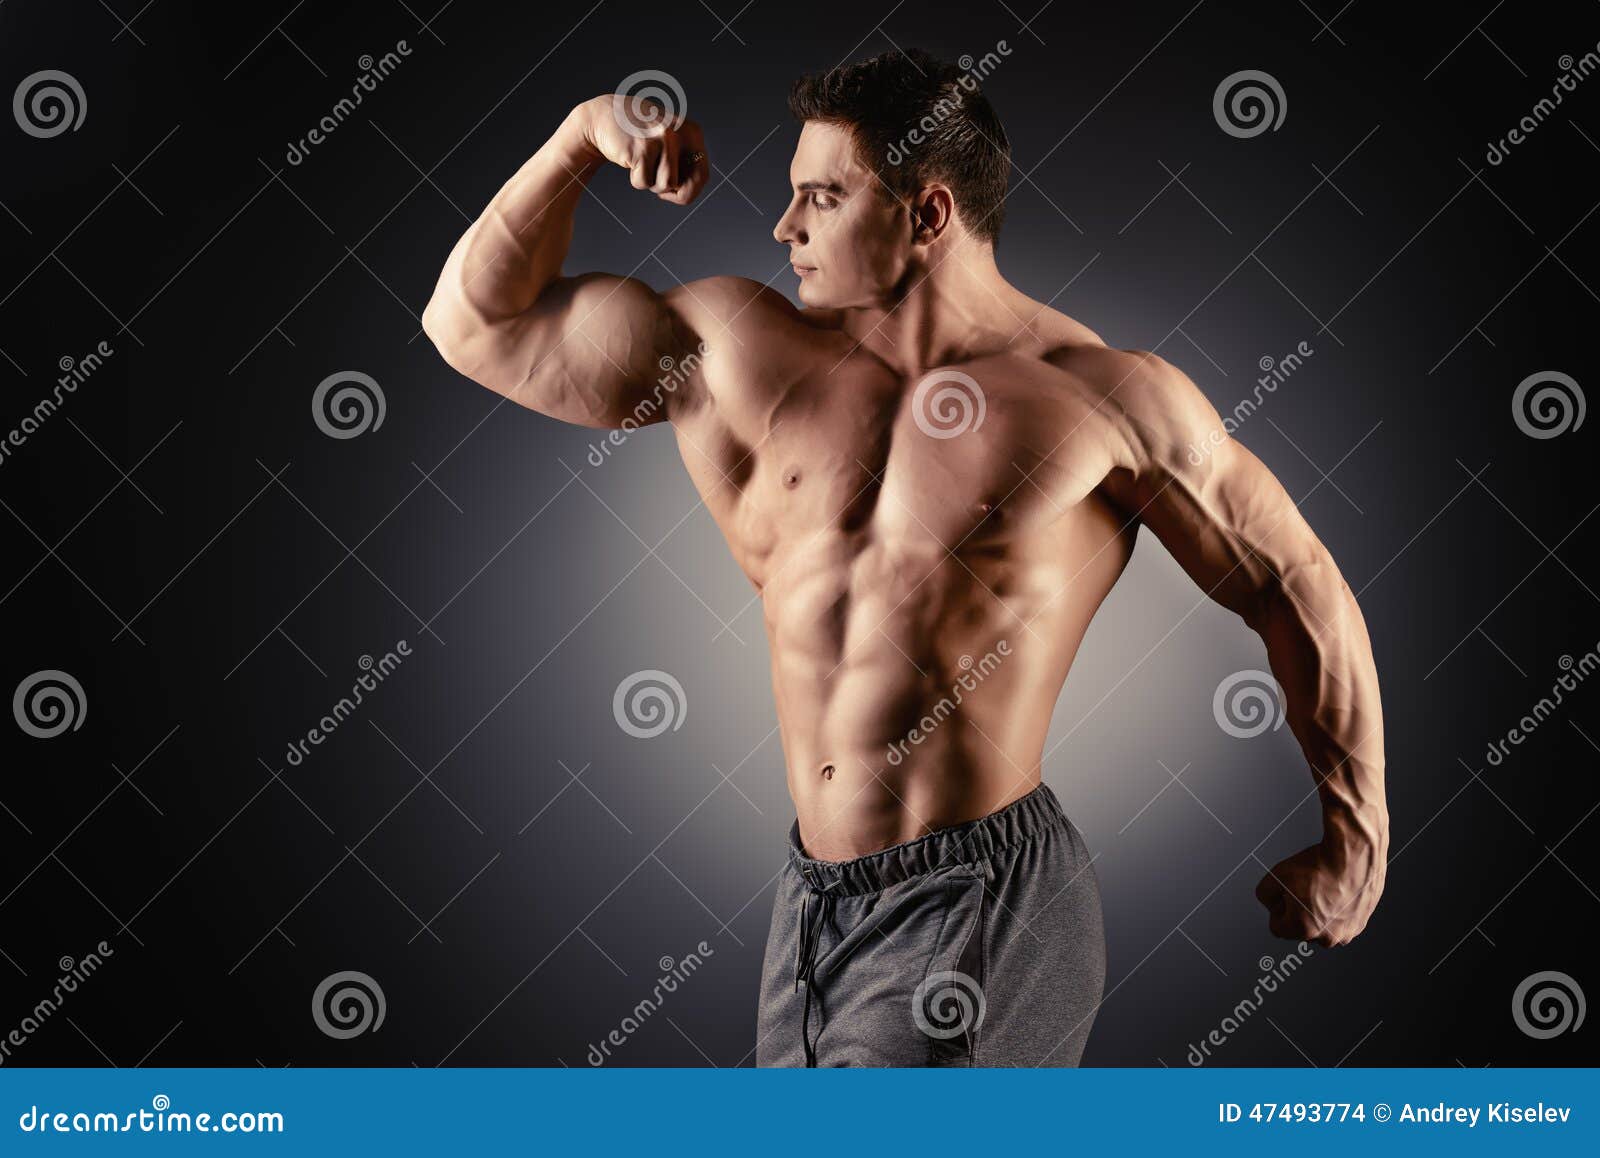 Bodybuilding stock photo. Image of champion, active, care - 47493774